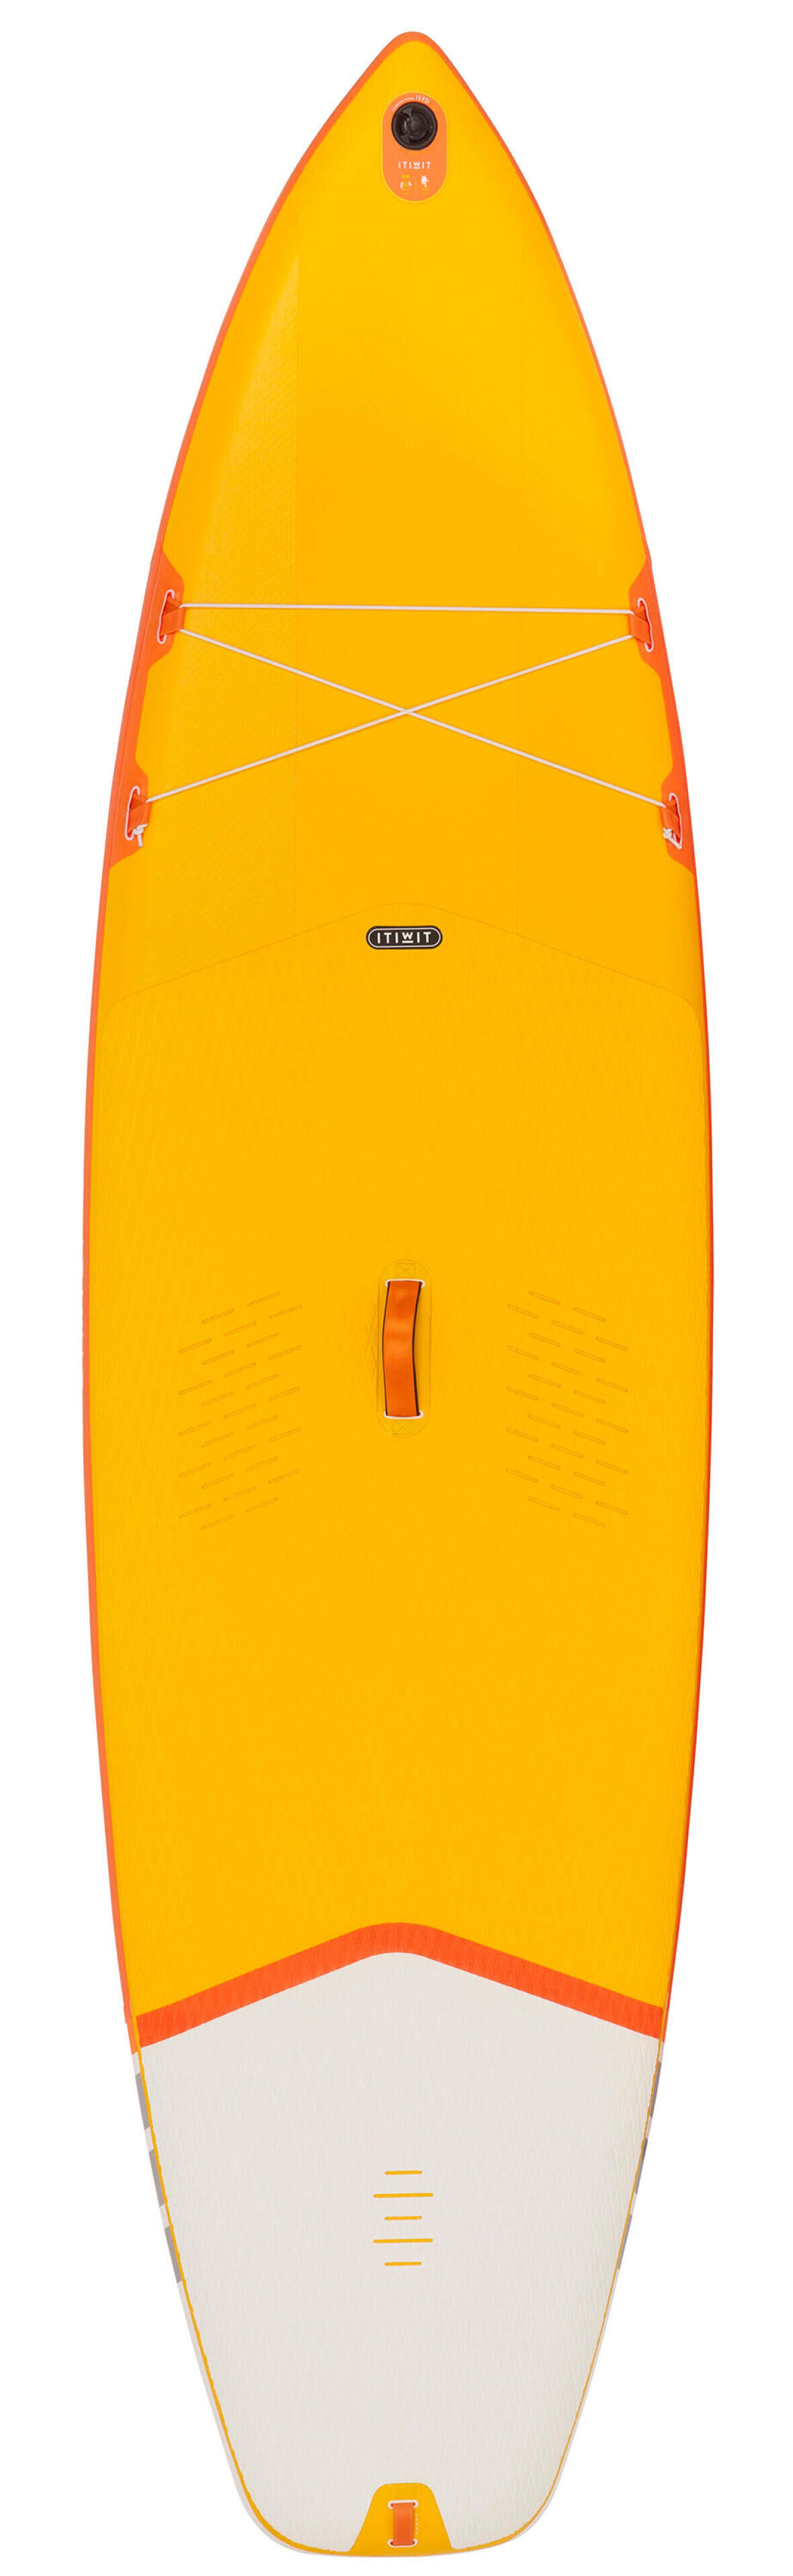 itiwit-inflatable-x100-sup-11-yellow-decathlon